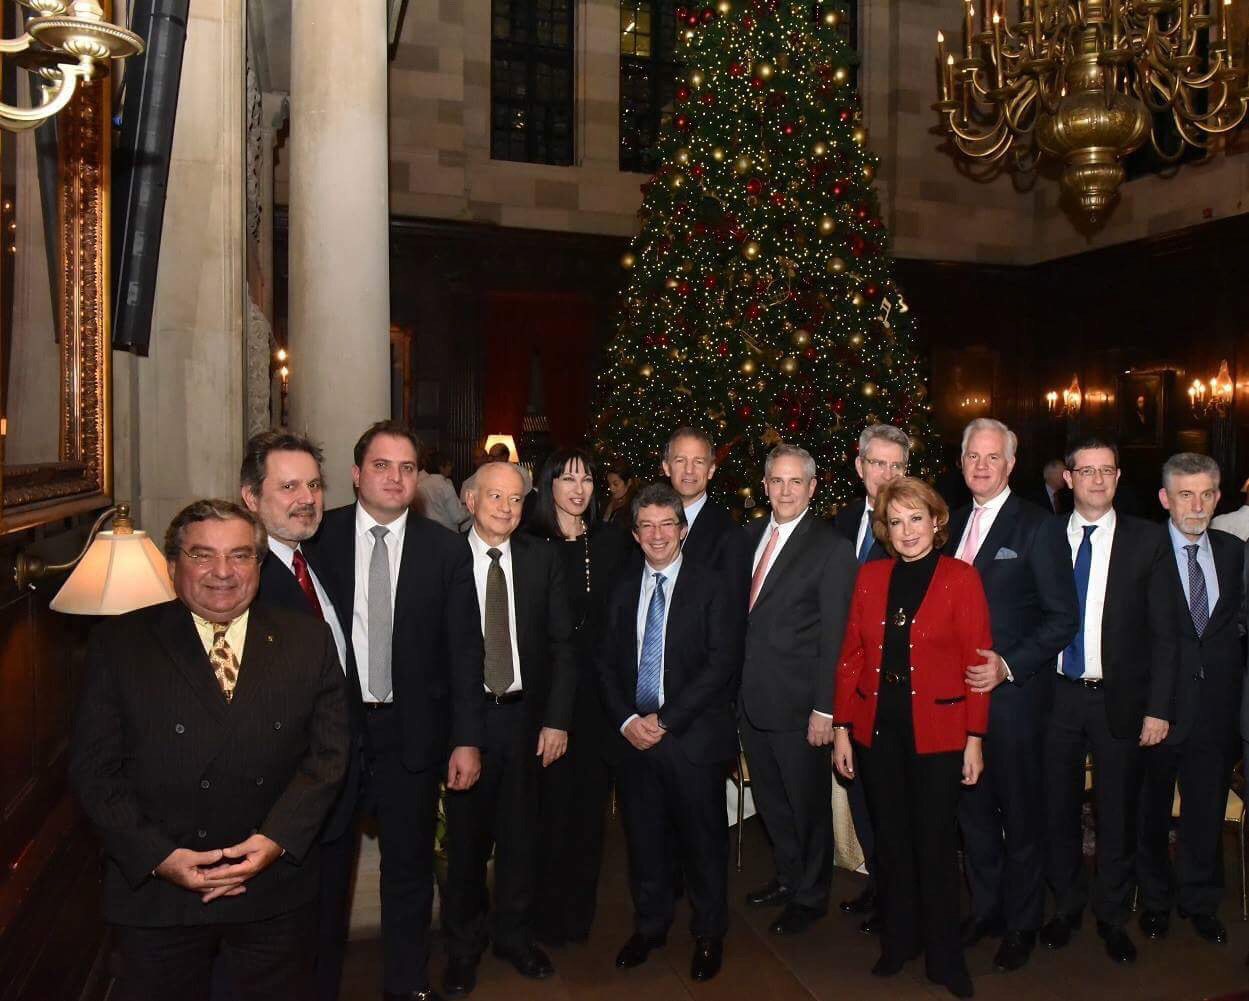 H Υπουργός Τουρισμού Έλενα Κουντουρά, με τον Jonathan Cohen, Αναπληρωτή Βοηθό Υπουργό Εξωτερικών των ΗΠΑ, τον Πρέσβη των ΗΠΑ στην Ελλάδα Geoffry Pyatt, τον Υπουργό Οικονομίας και Ανάπτυξης Δημήτρη Παπαδημητρίου, τον Πρέσβη της Ελλάδας στις ΗΠΑ, Χάρη Λαλάκο, τον Διοικητή της ΑΑΔΕ Γ. Πιτσιλή, τον Γ.Γ. Τουριστικής Πολιτικής και Ανάπτυξης Γιώργο Τζιάλλα,τους διοργανωτές του Capital Link, Νικόλαο και Όλγα Μπορνόζη, και τον βραβευθέντα επιχειρηματία Andre Calantzopoulos.